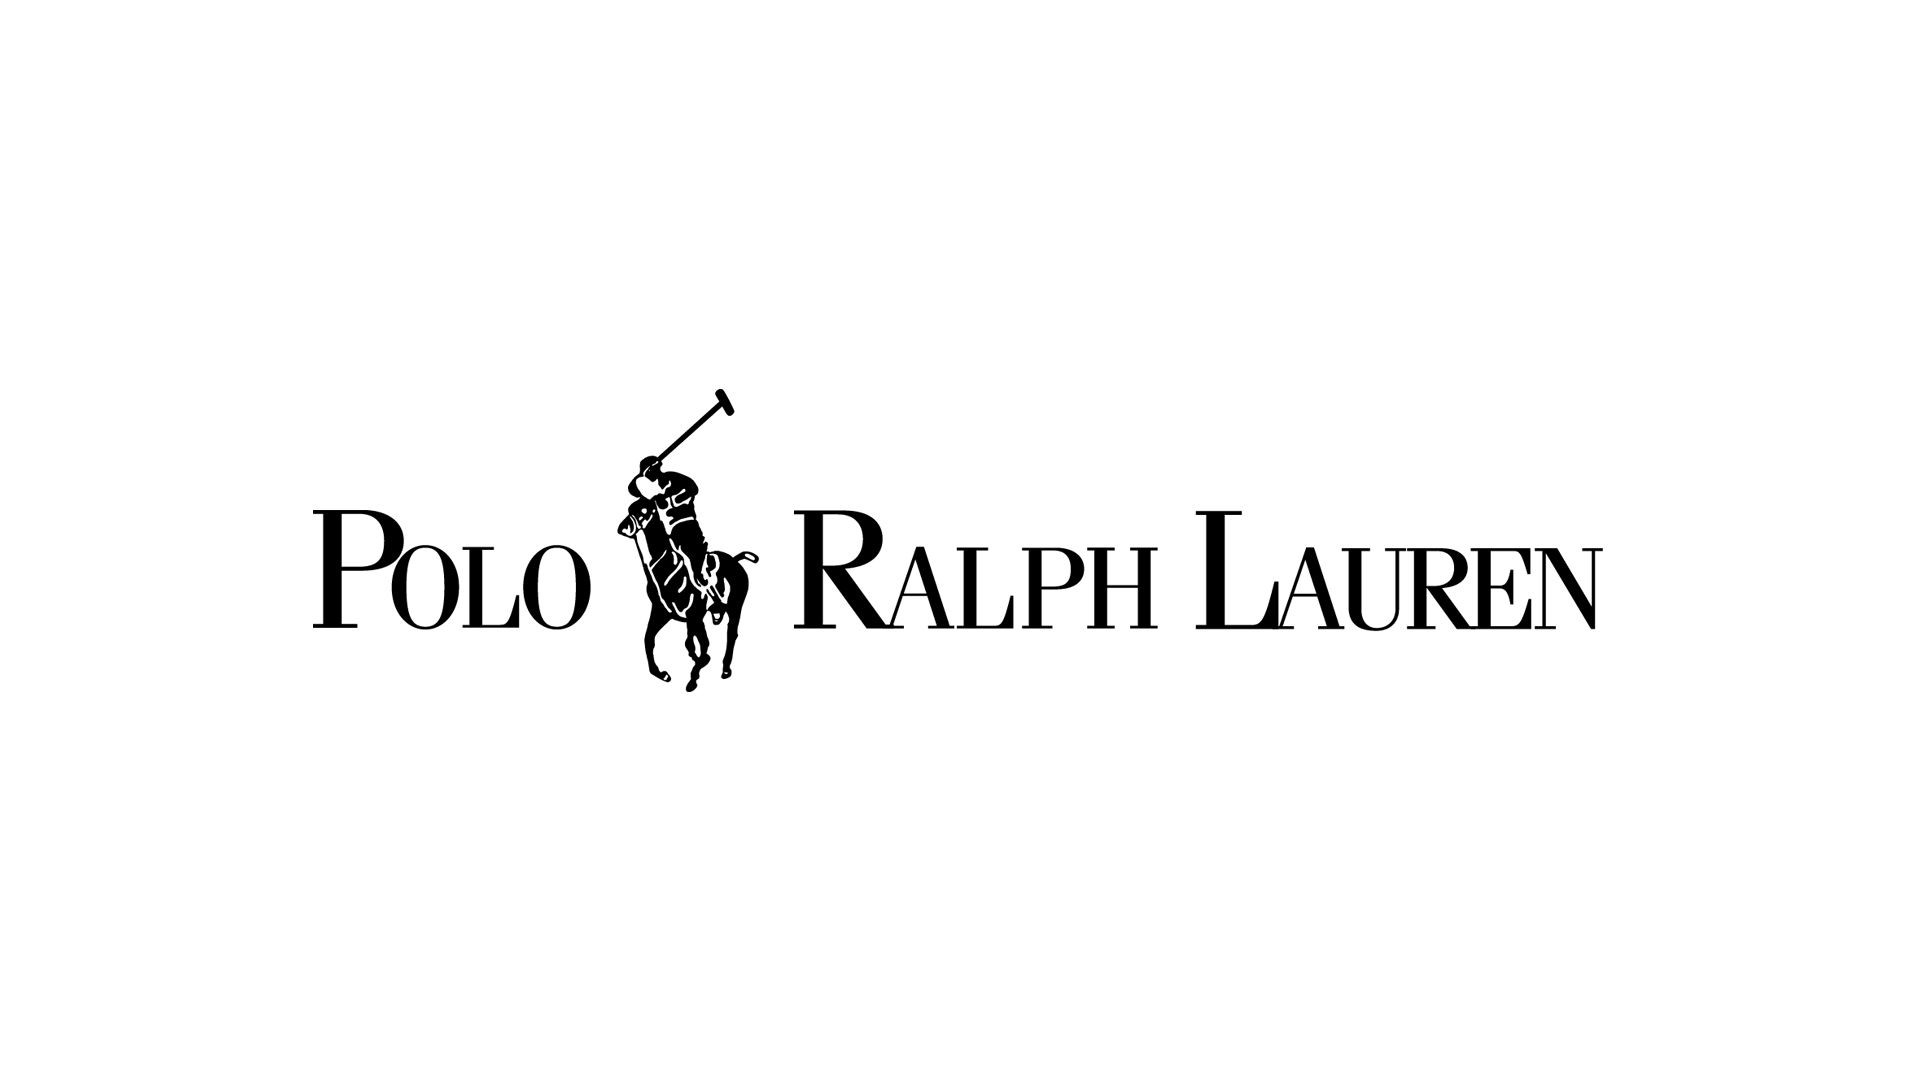 1920x1080 Polo Ralph Lauren Logo Wallpapers Wallpapers All Superior Polo Ralph Lauren Logo Wallpapers Backgrounds